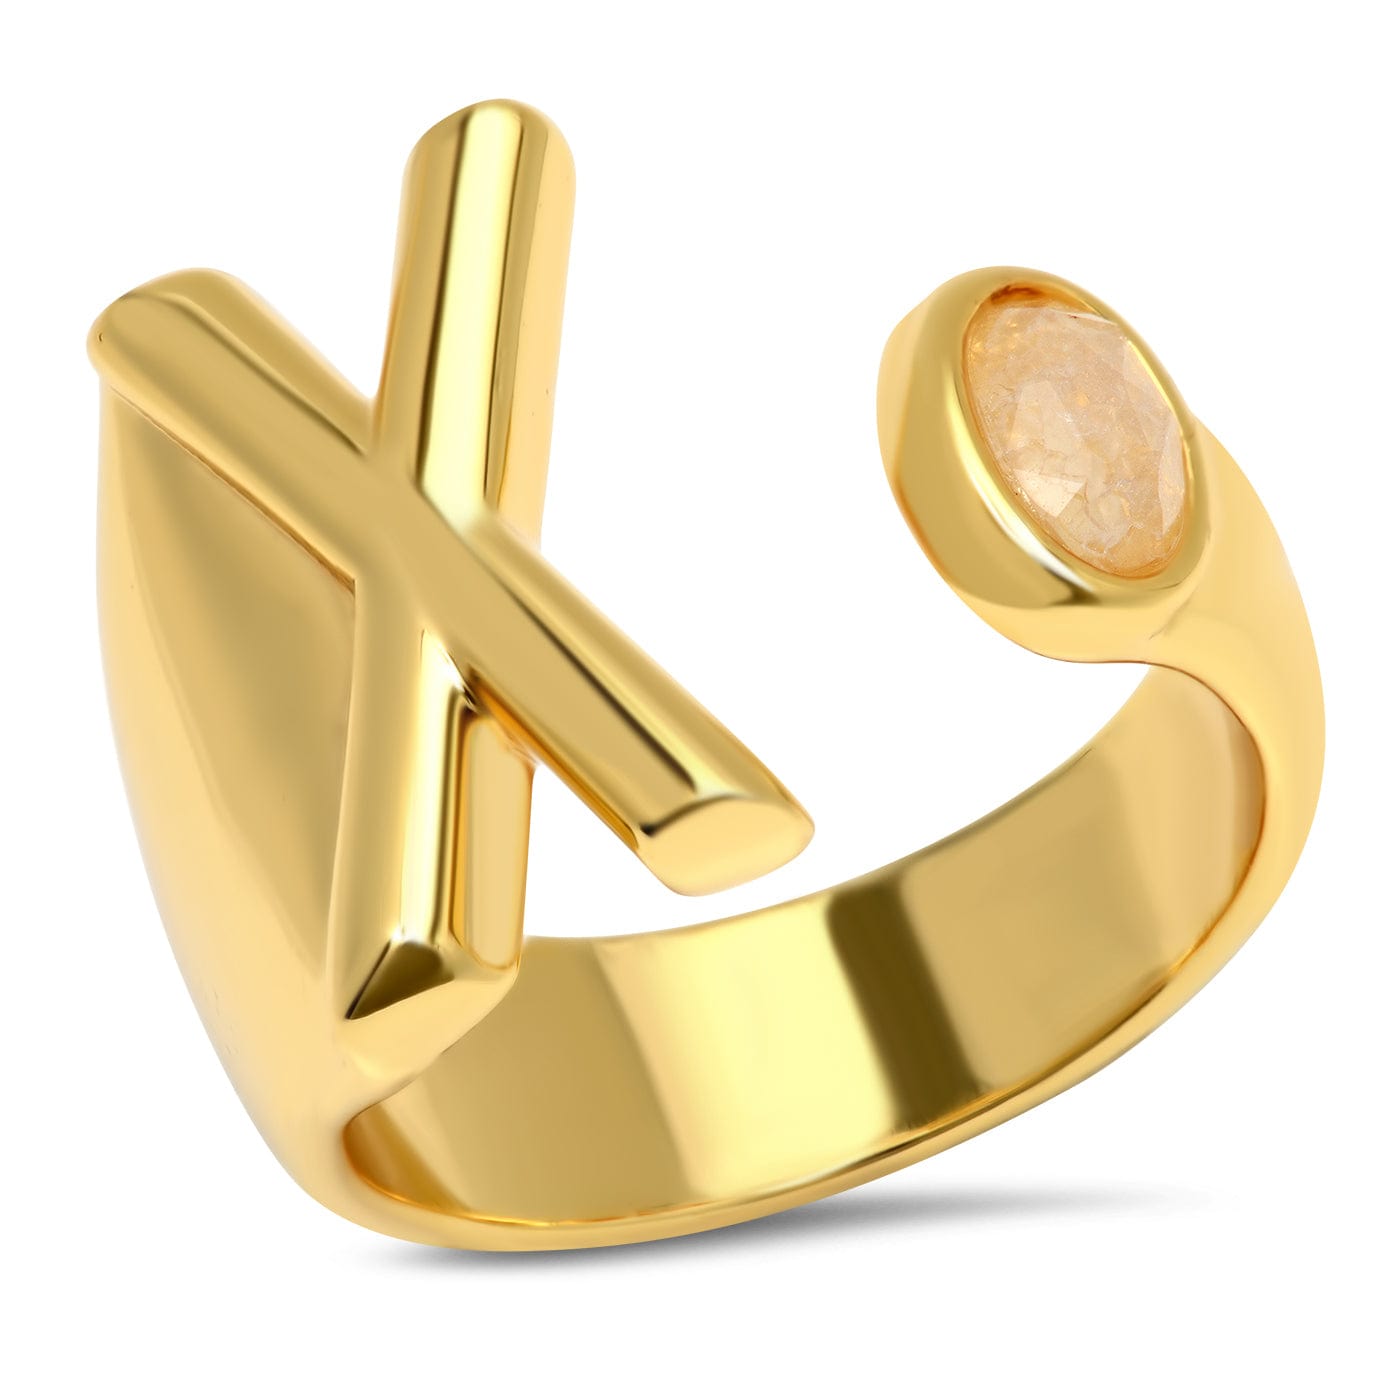 TAI JEWELRY Rings X Initial Wrap Ring